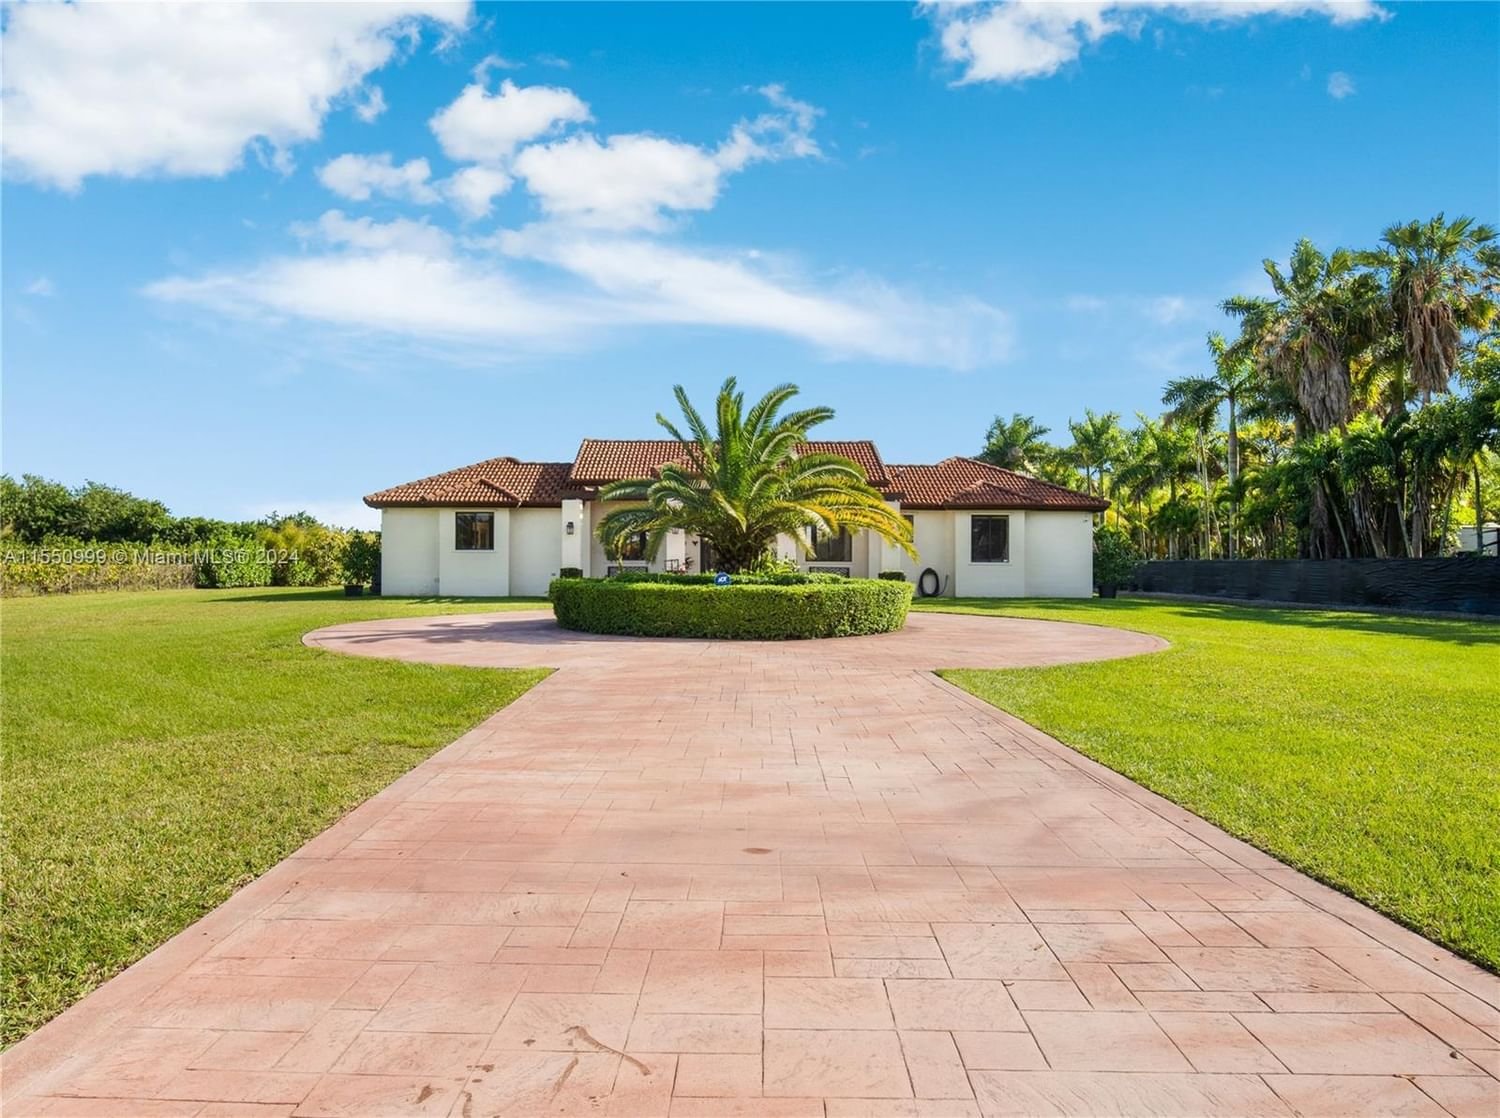 Real estate property located at 16850 164th St, Miami-Dade County, ., Miami, FL